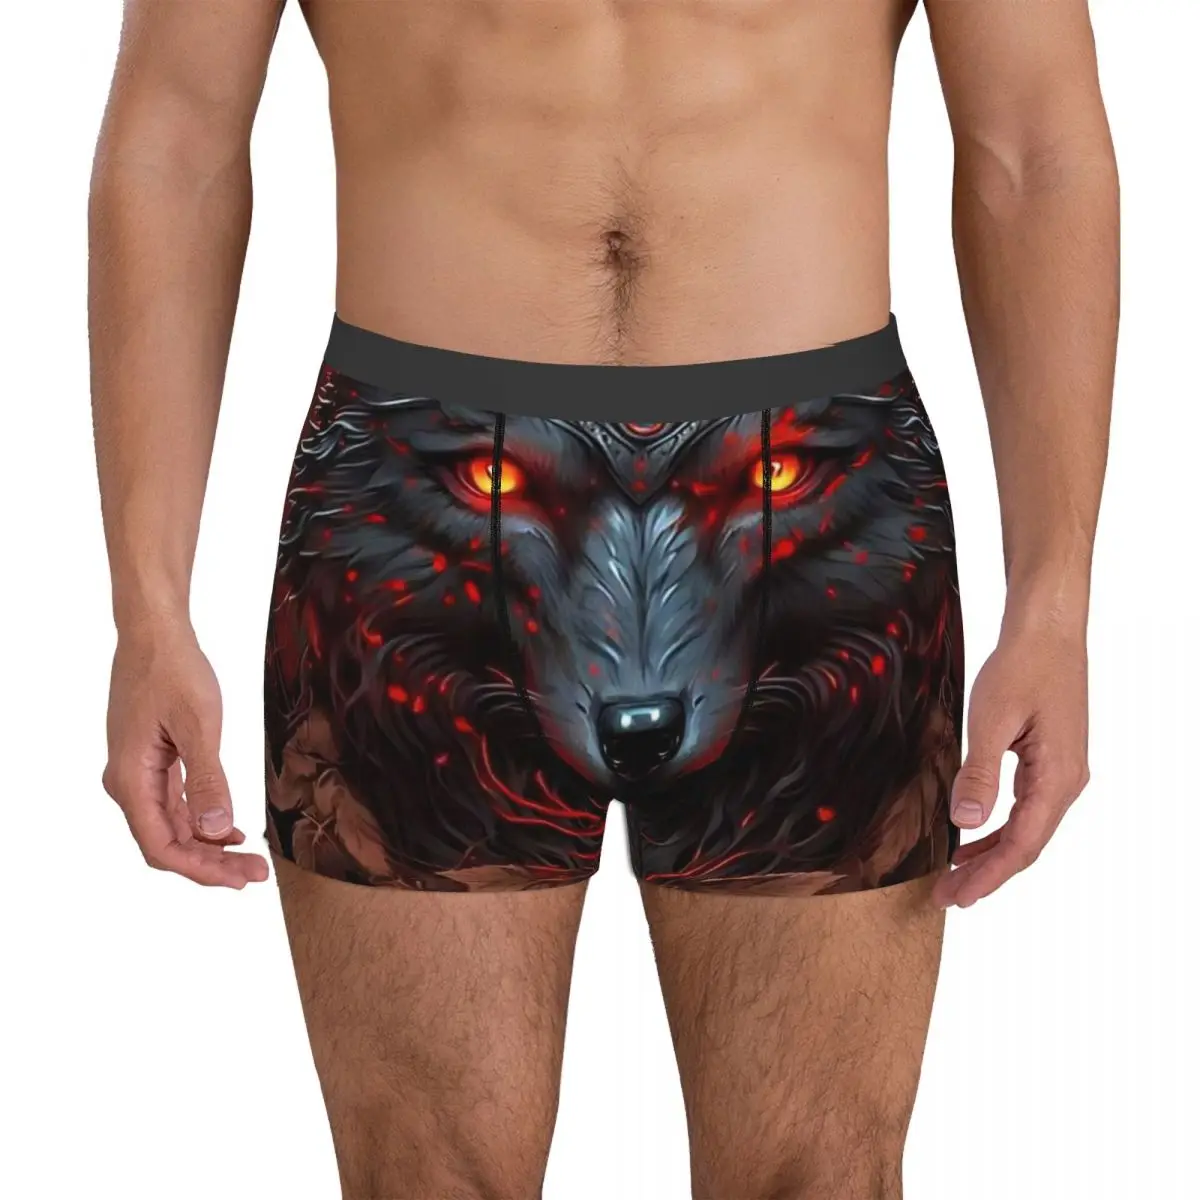 Wolf Underpants Cotton Panties Men's Underwear Ventilate Shorts